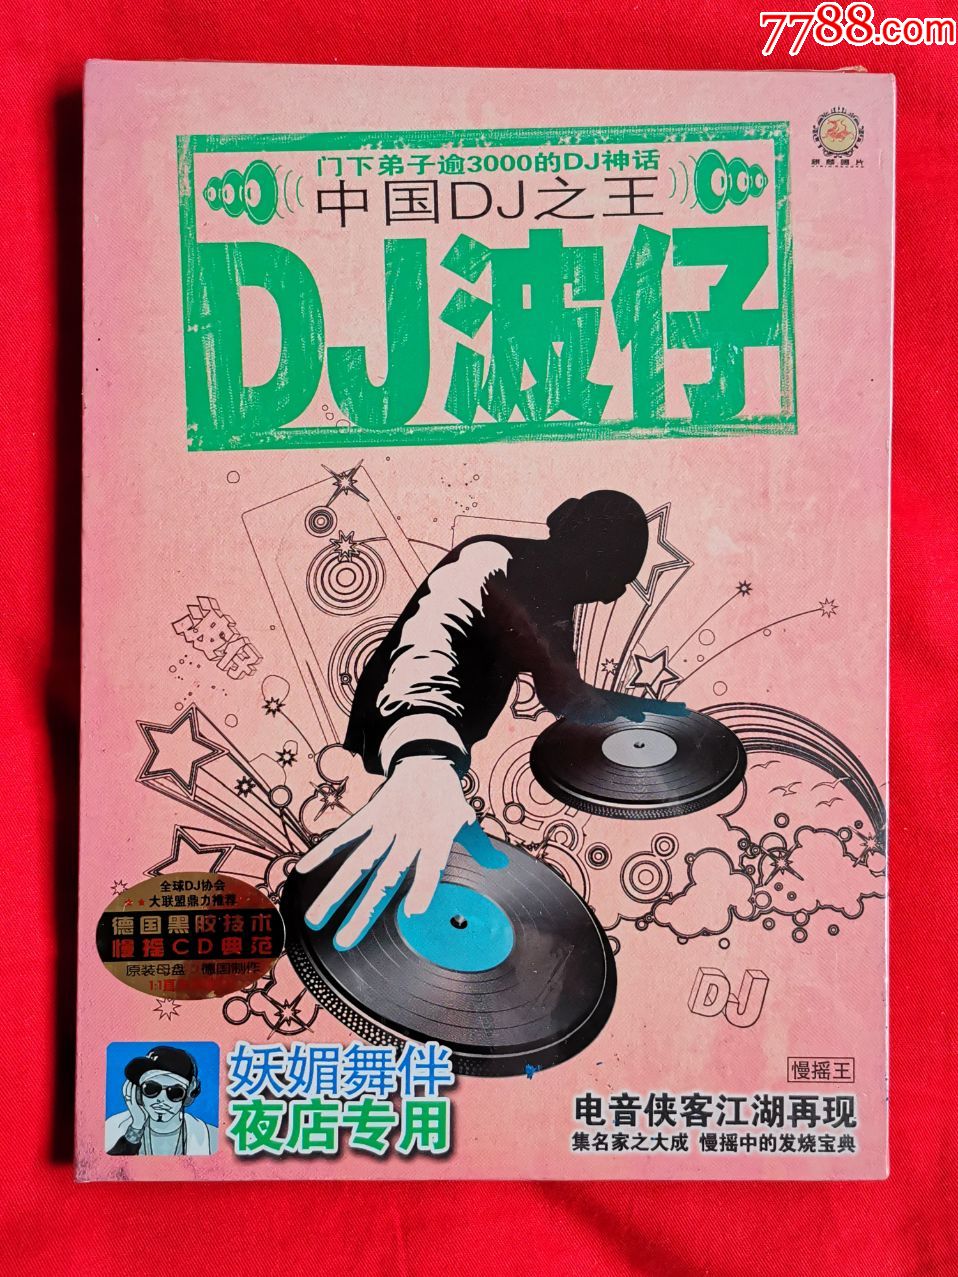 《dj波仔》电音舞曲慢摇酒吧迪厅劲爆音乐cd